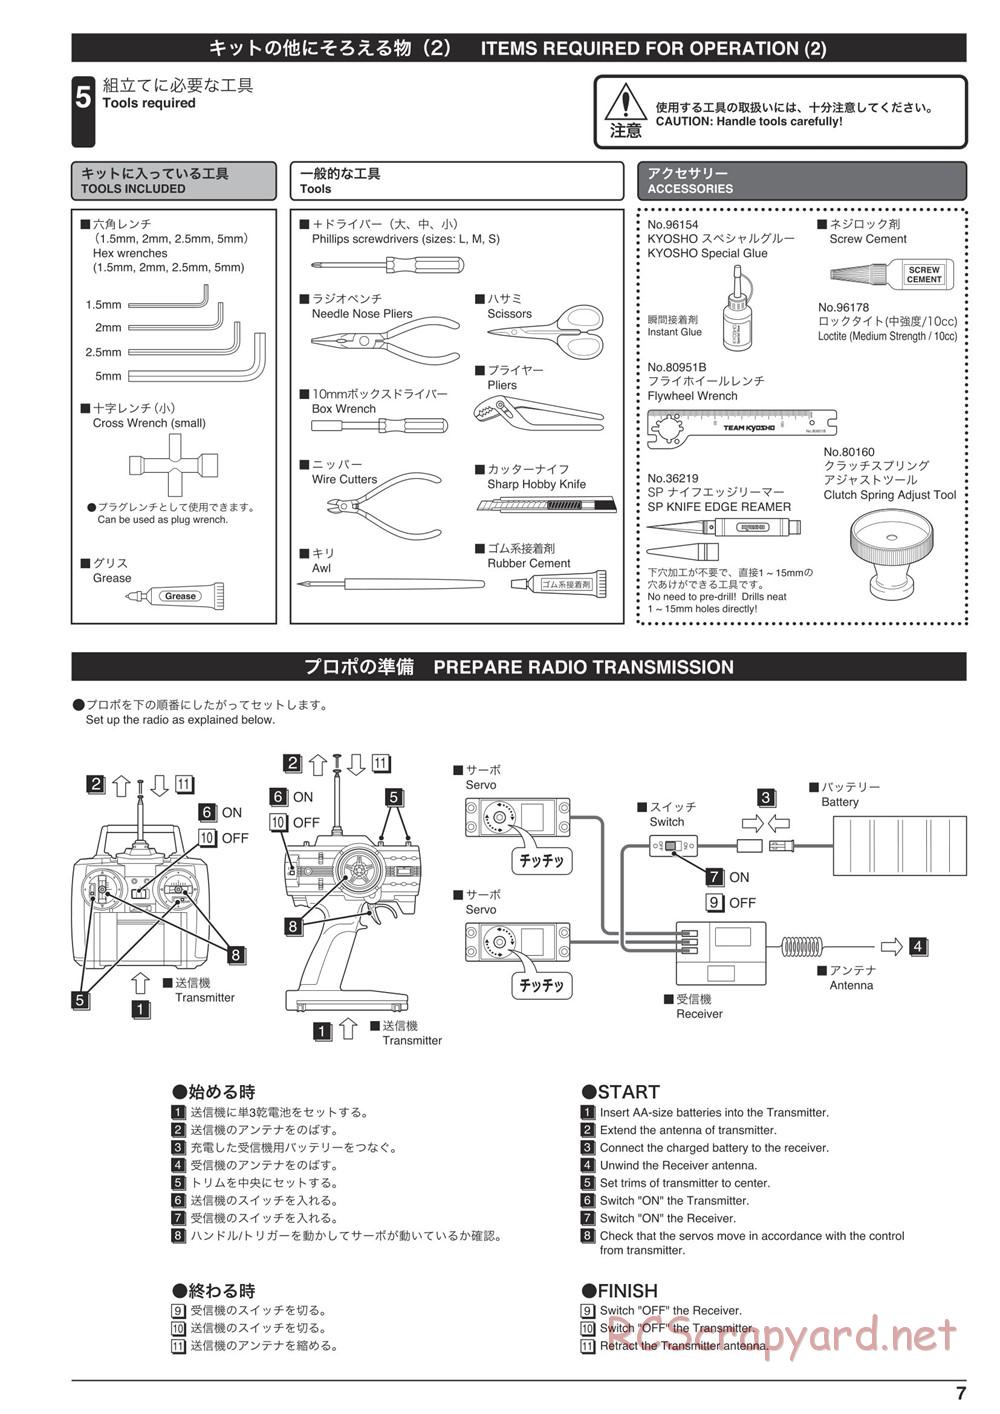 Kyosho - V-One RRR Shimo - Manual - Page 7